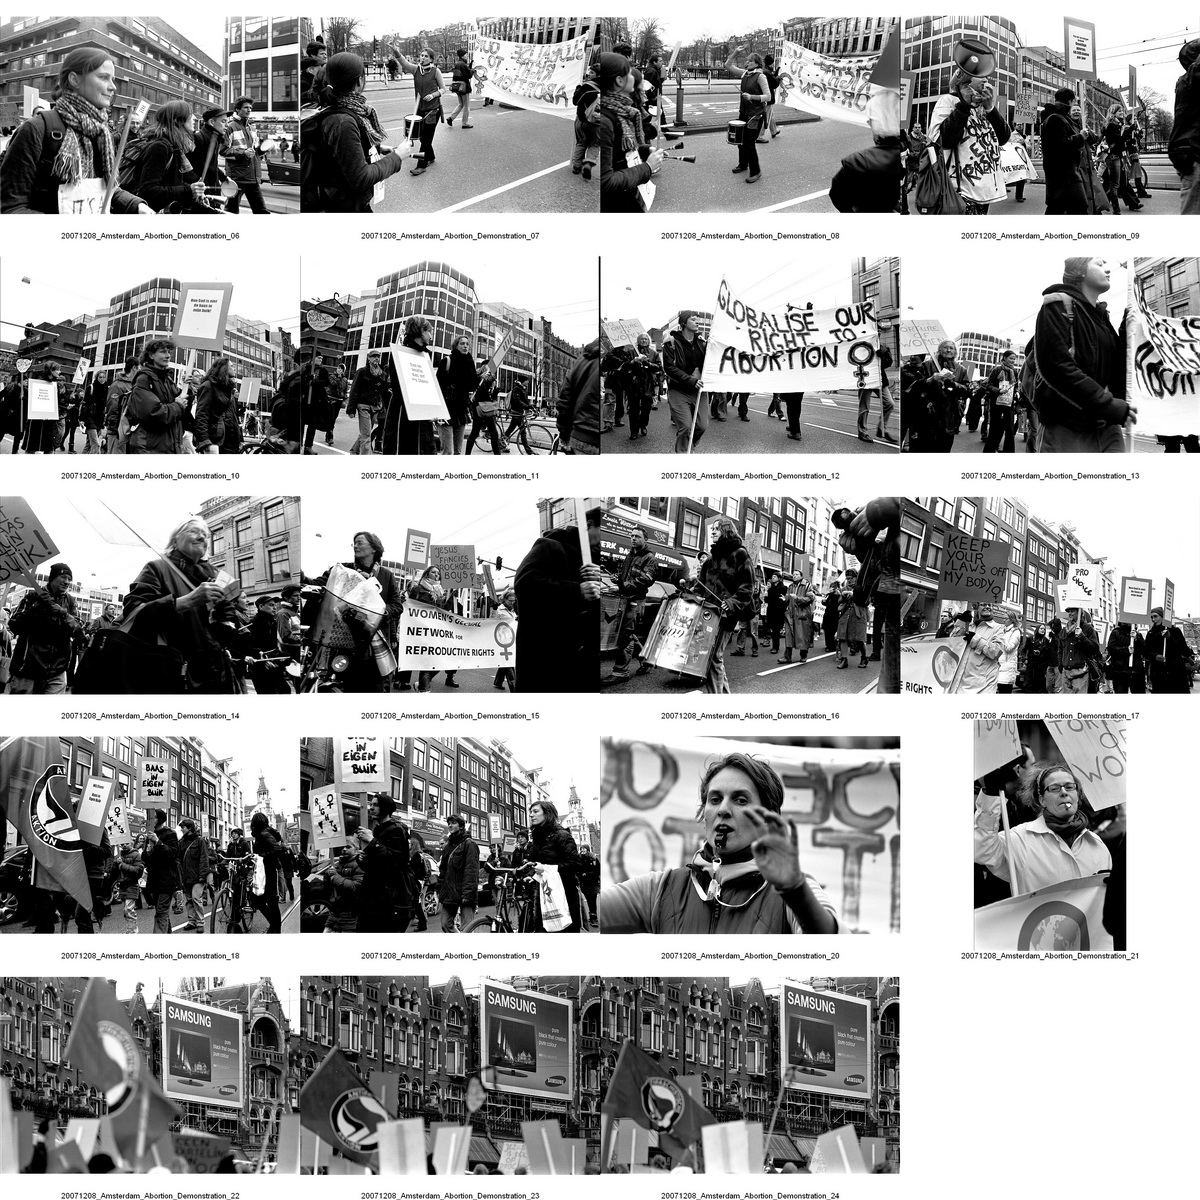 [20071208_Abortion_Demonstration_photos_Amsterdam_NL_contact_sheet_resize.jpg]